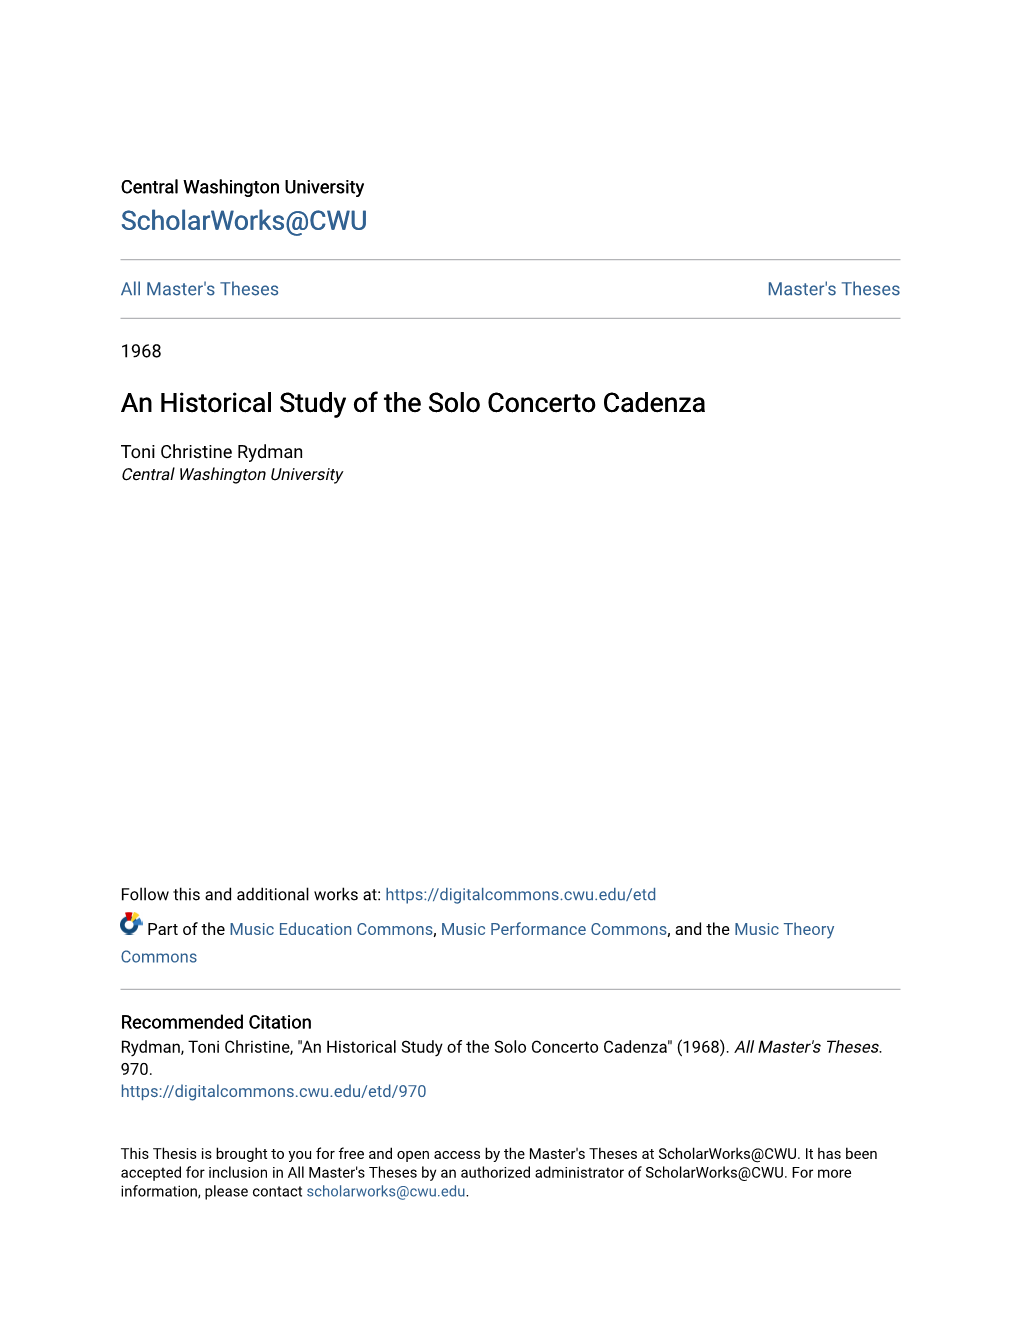 An Historical Study of the Solo Concerto Cadenza